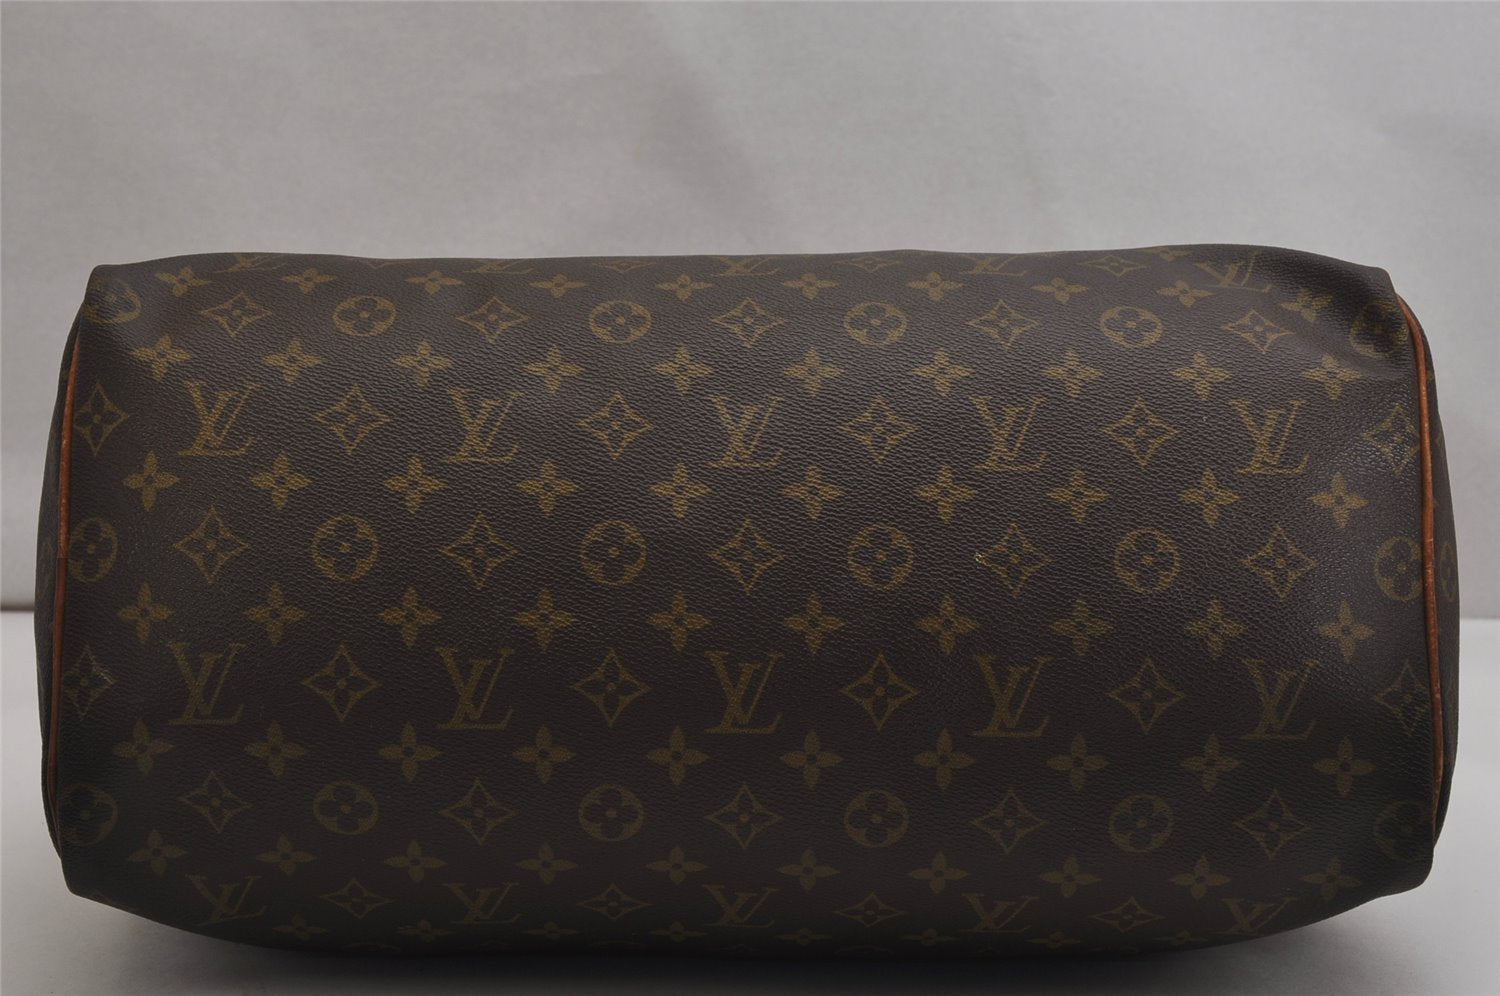 Authentic Louis Vuitton Monogram Speedy 40 Hand Boston Bag M41522 LV 9966J